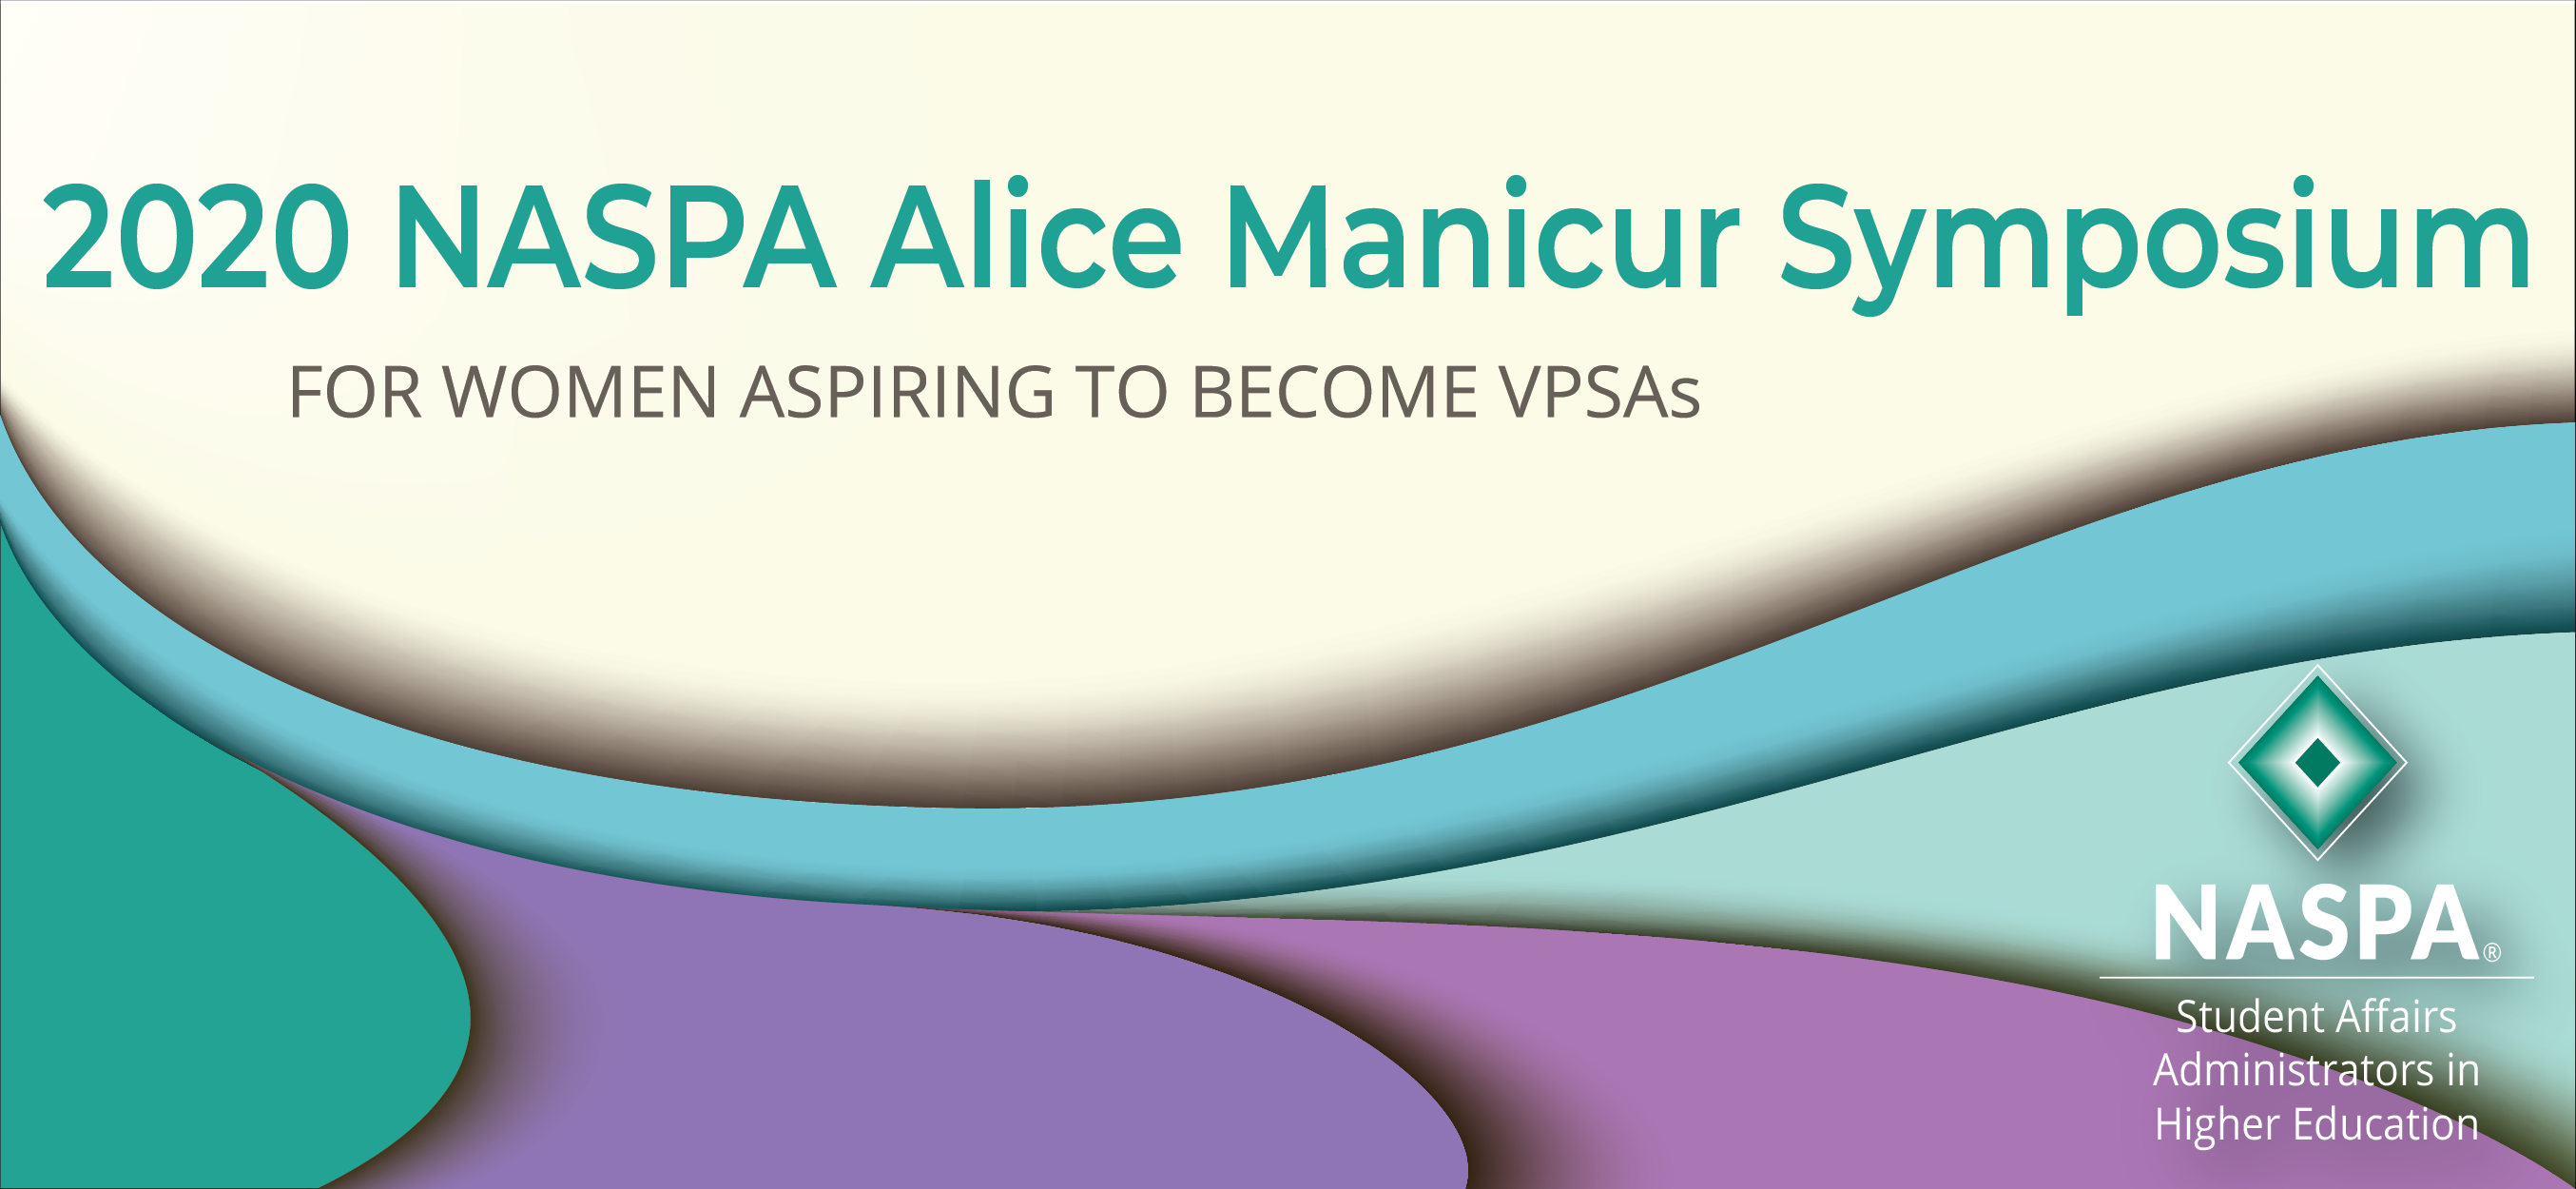 2020 NASPA Alice Manicur Symposium